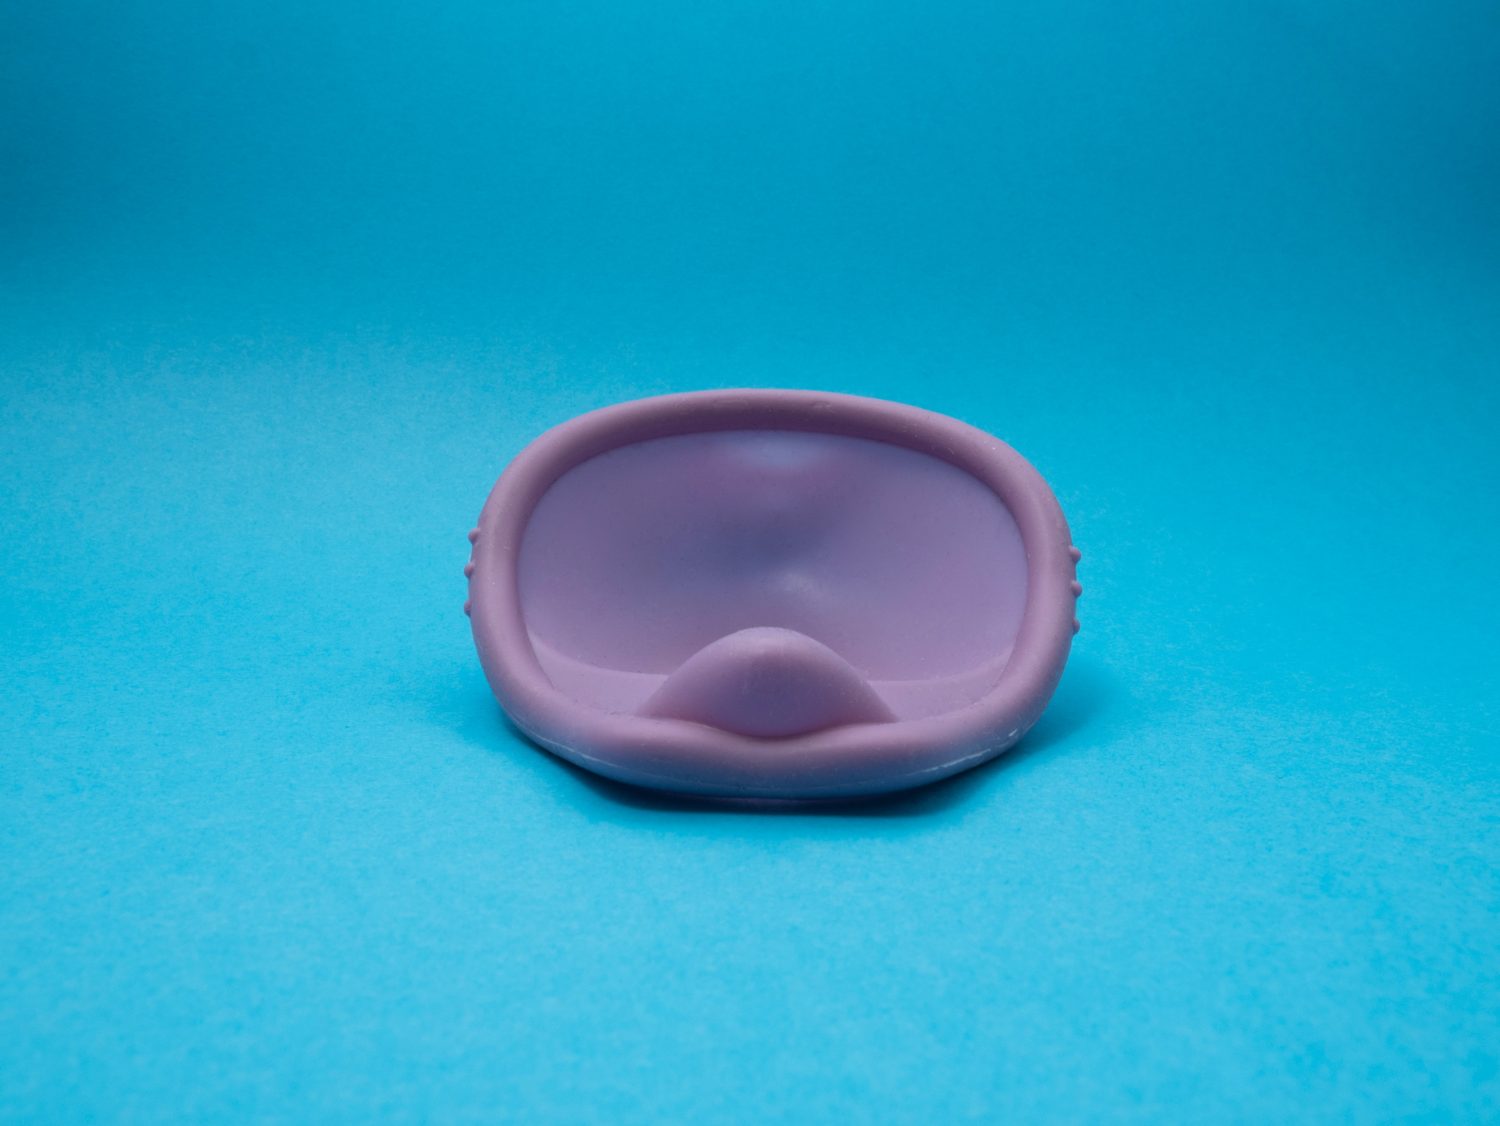 Contraception: The Diaphragm